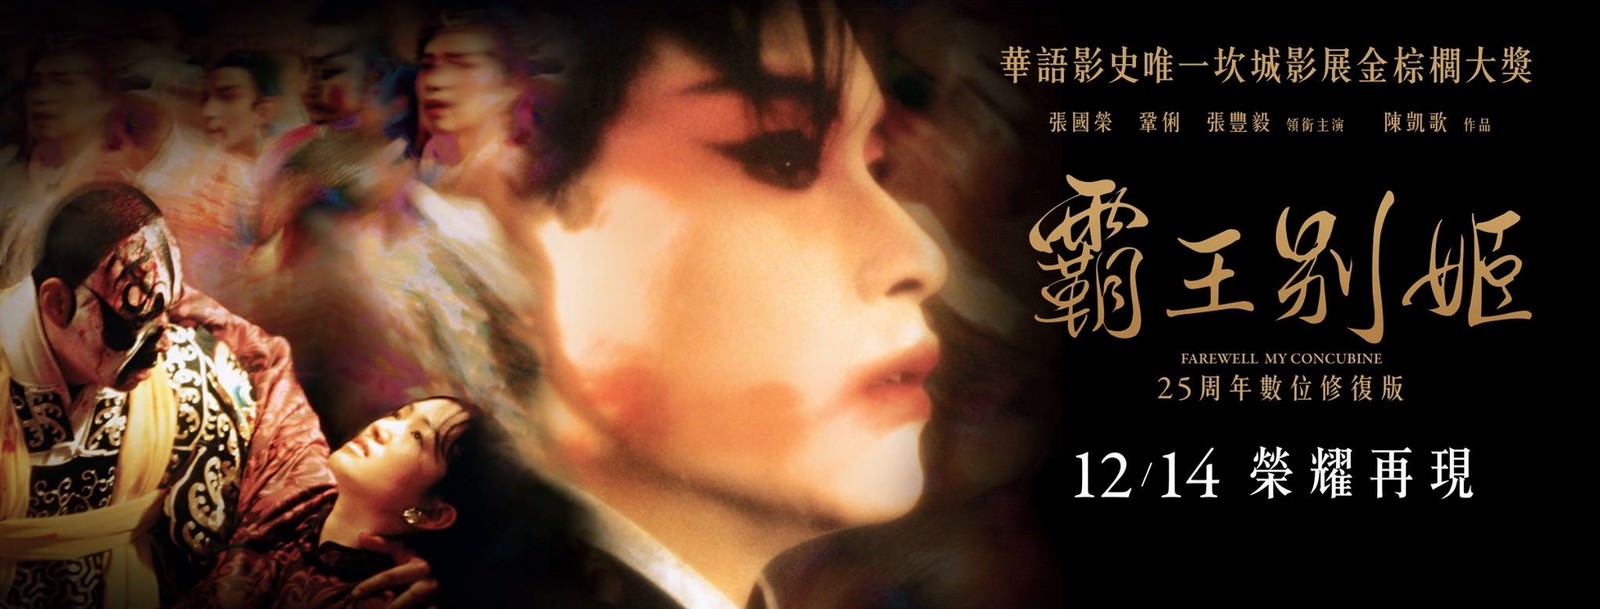 Movie, 霸王别姬(中國, 1993年) / 霸王別姬(台灣) / Farewell My Concubine(英文), 電影海報, 台灣, 25周年數位修復版, 橫版(非正式)